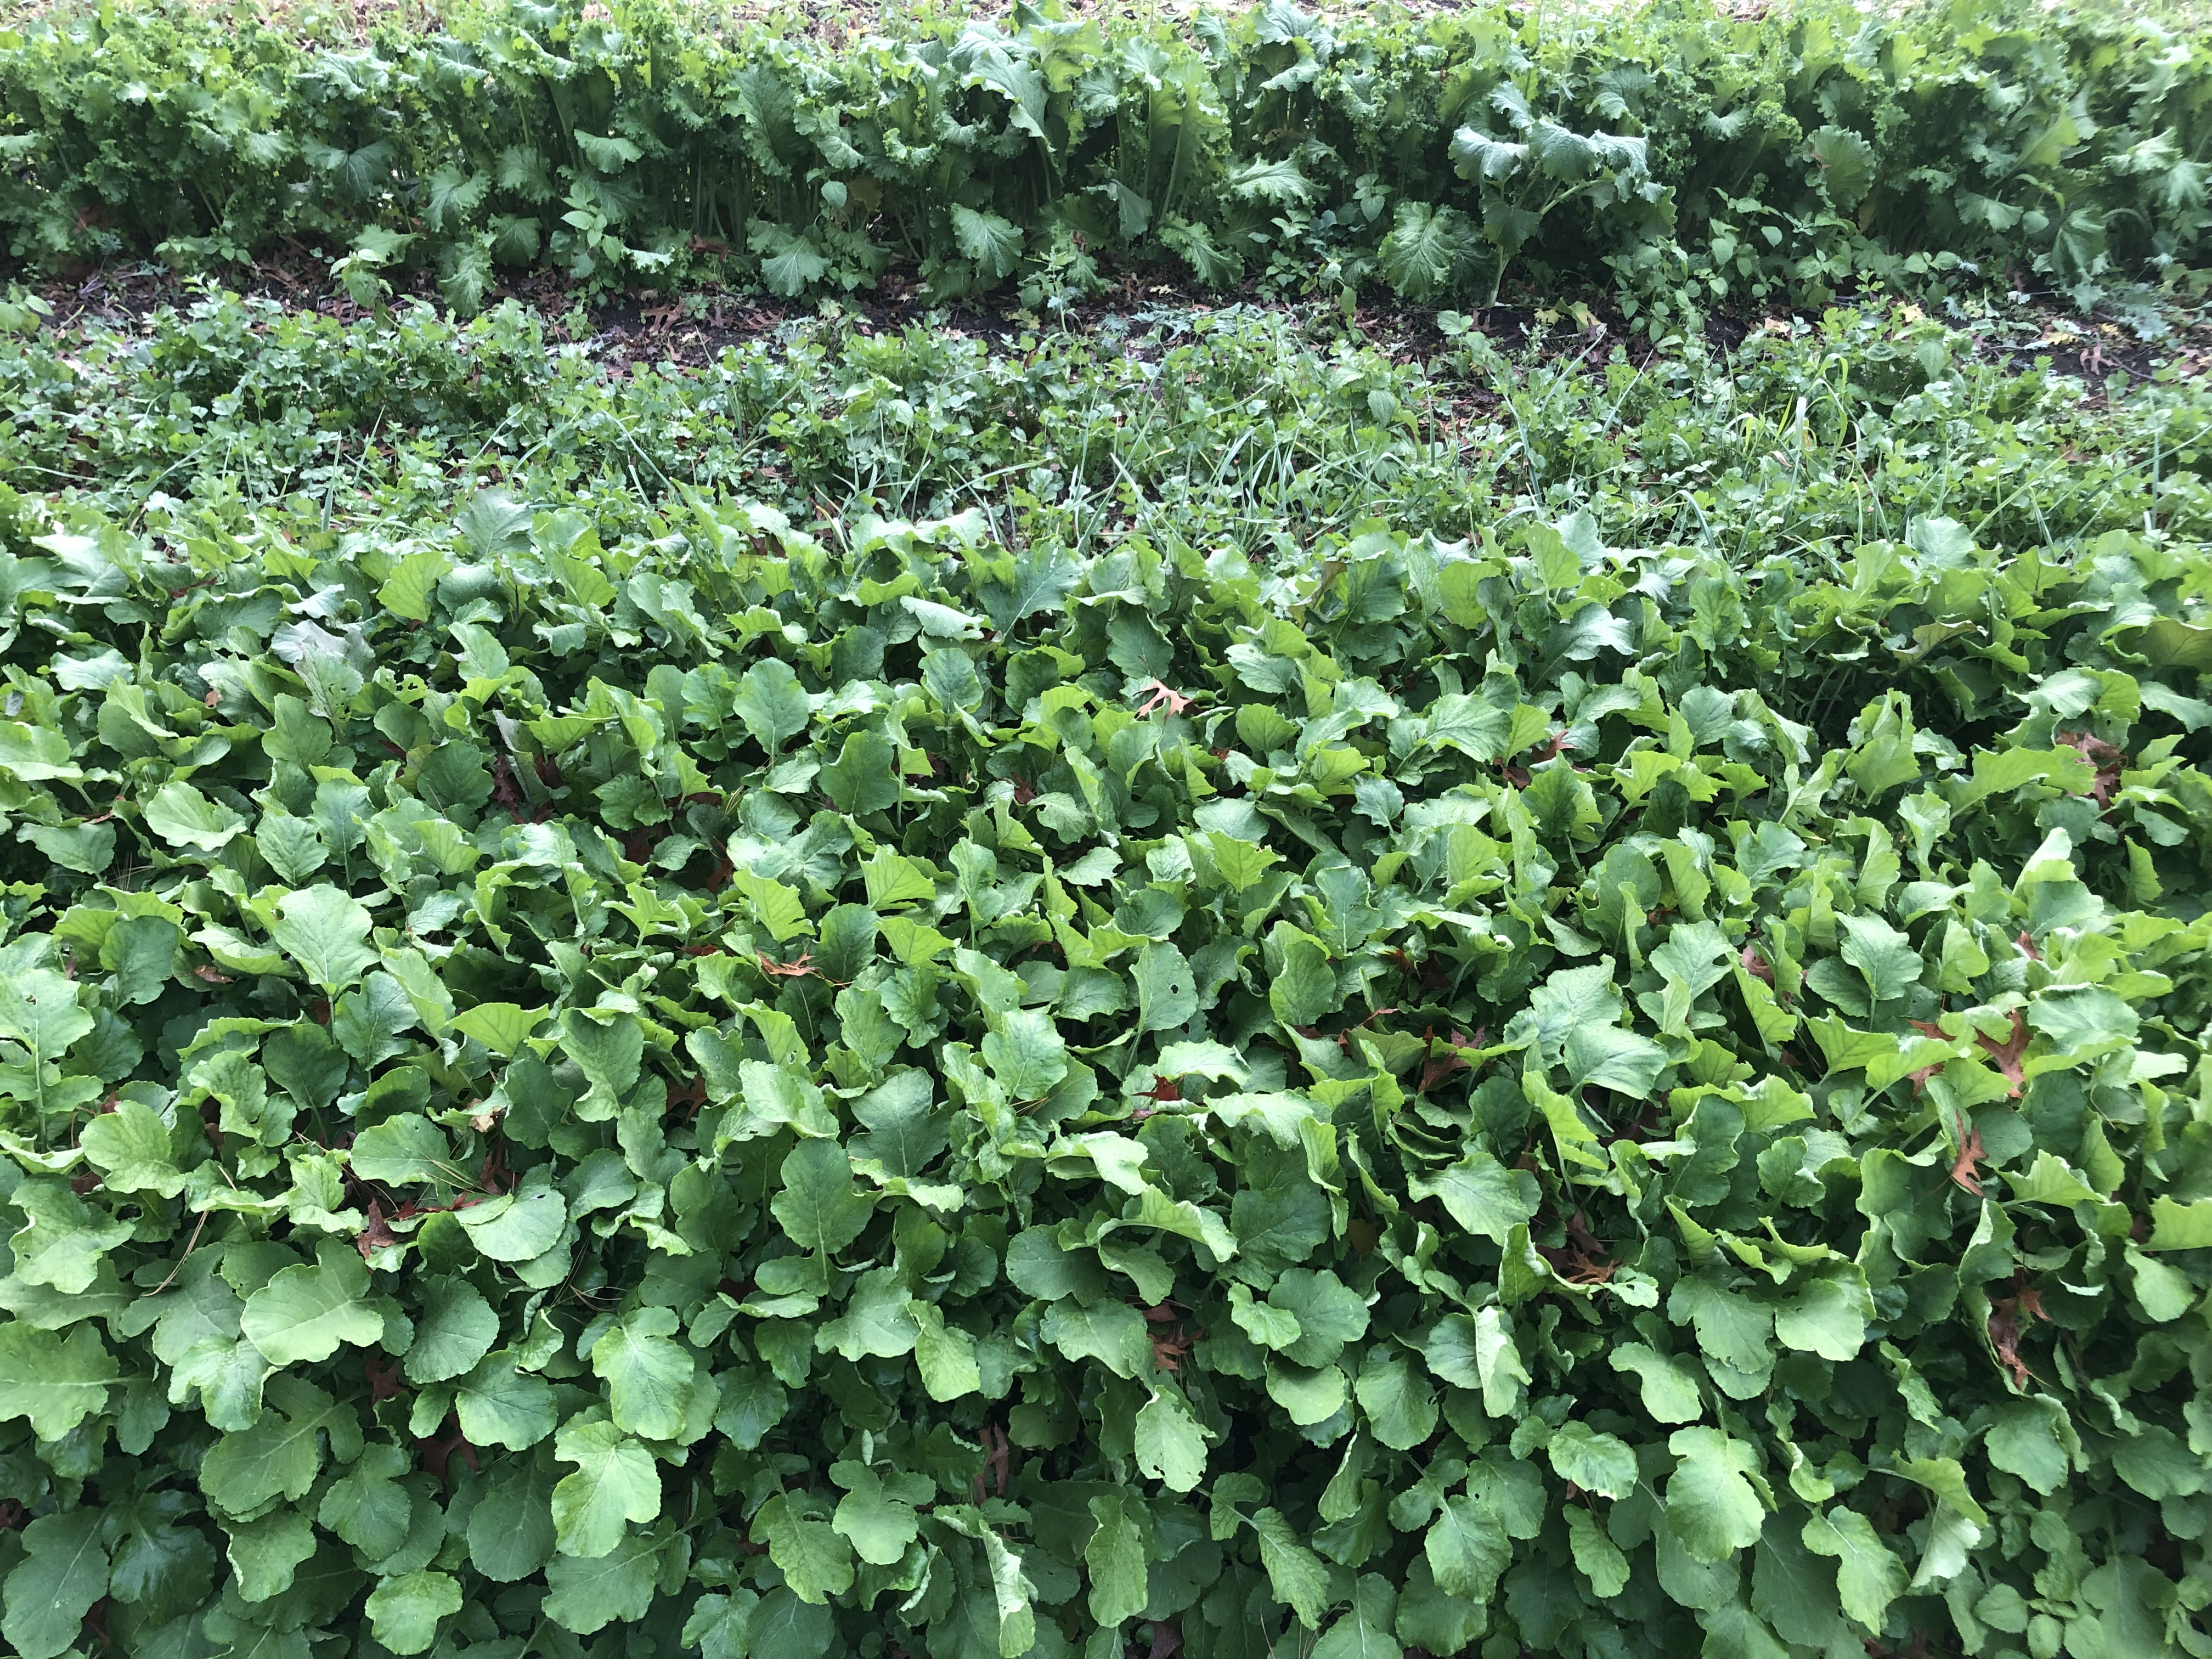 field of daikon radishes